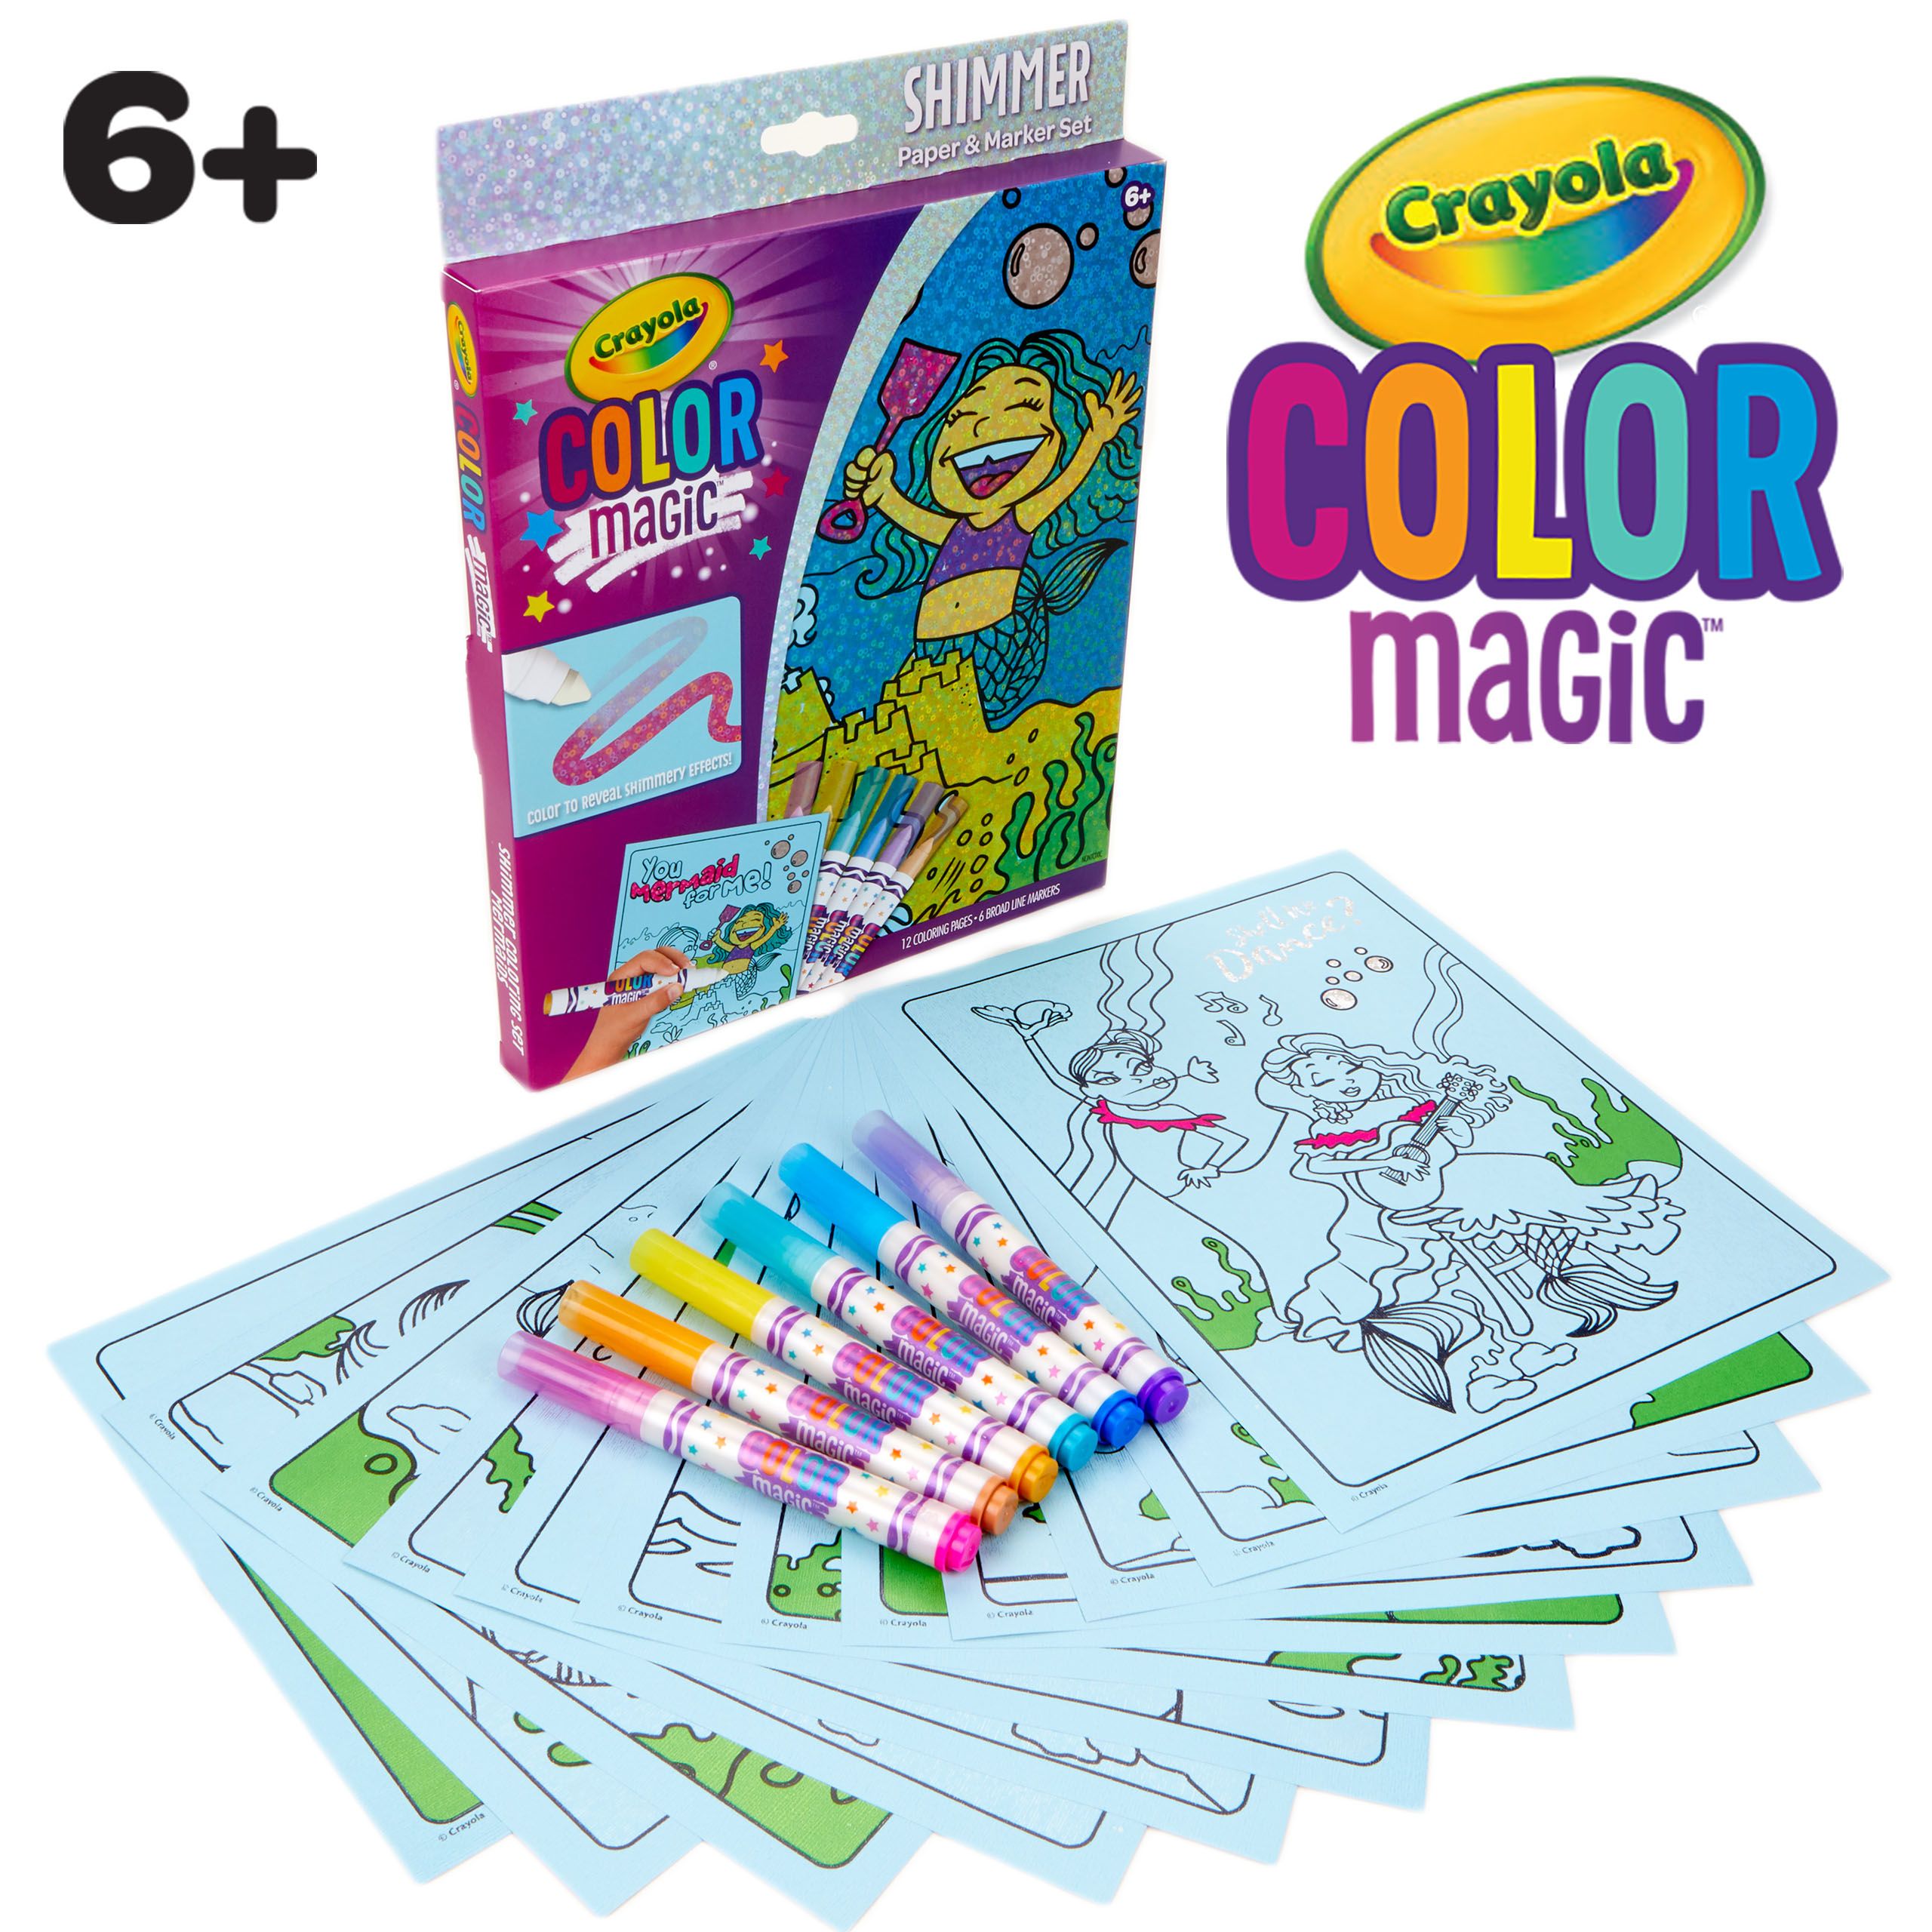 Crayola Color Magic Shimmery Mermaids - Walmart.com